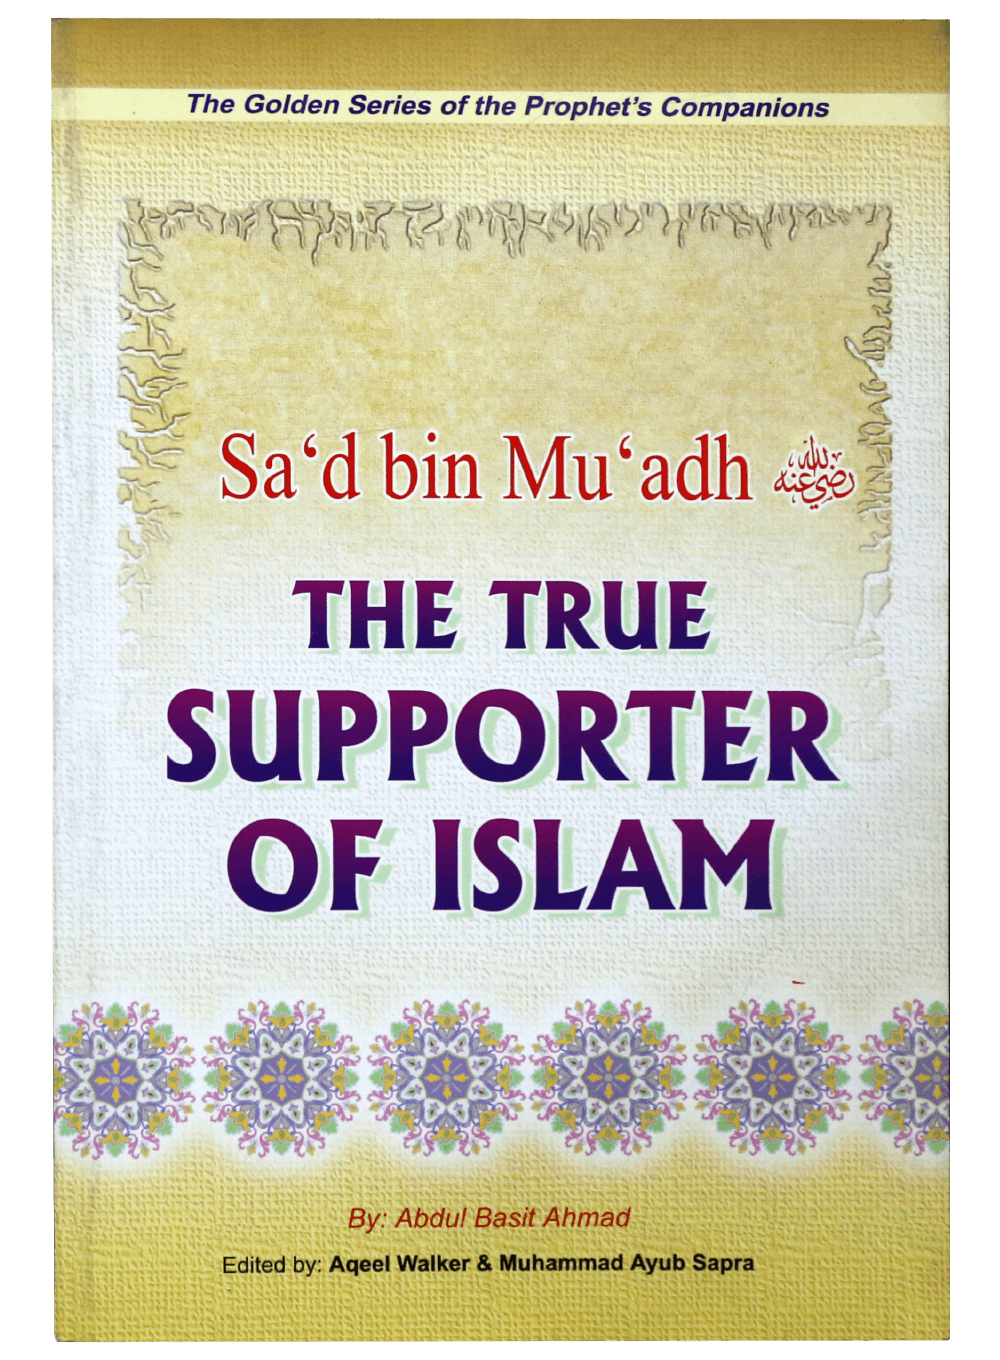 Sad Bin Muadh - The True Supporter Of Islam